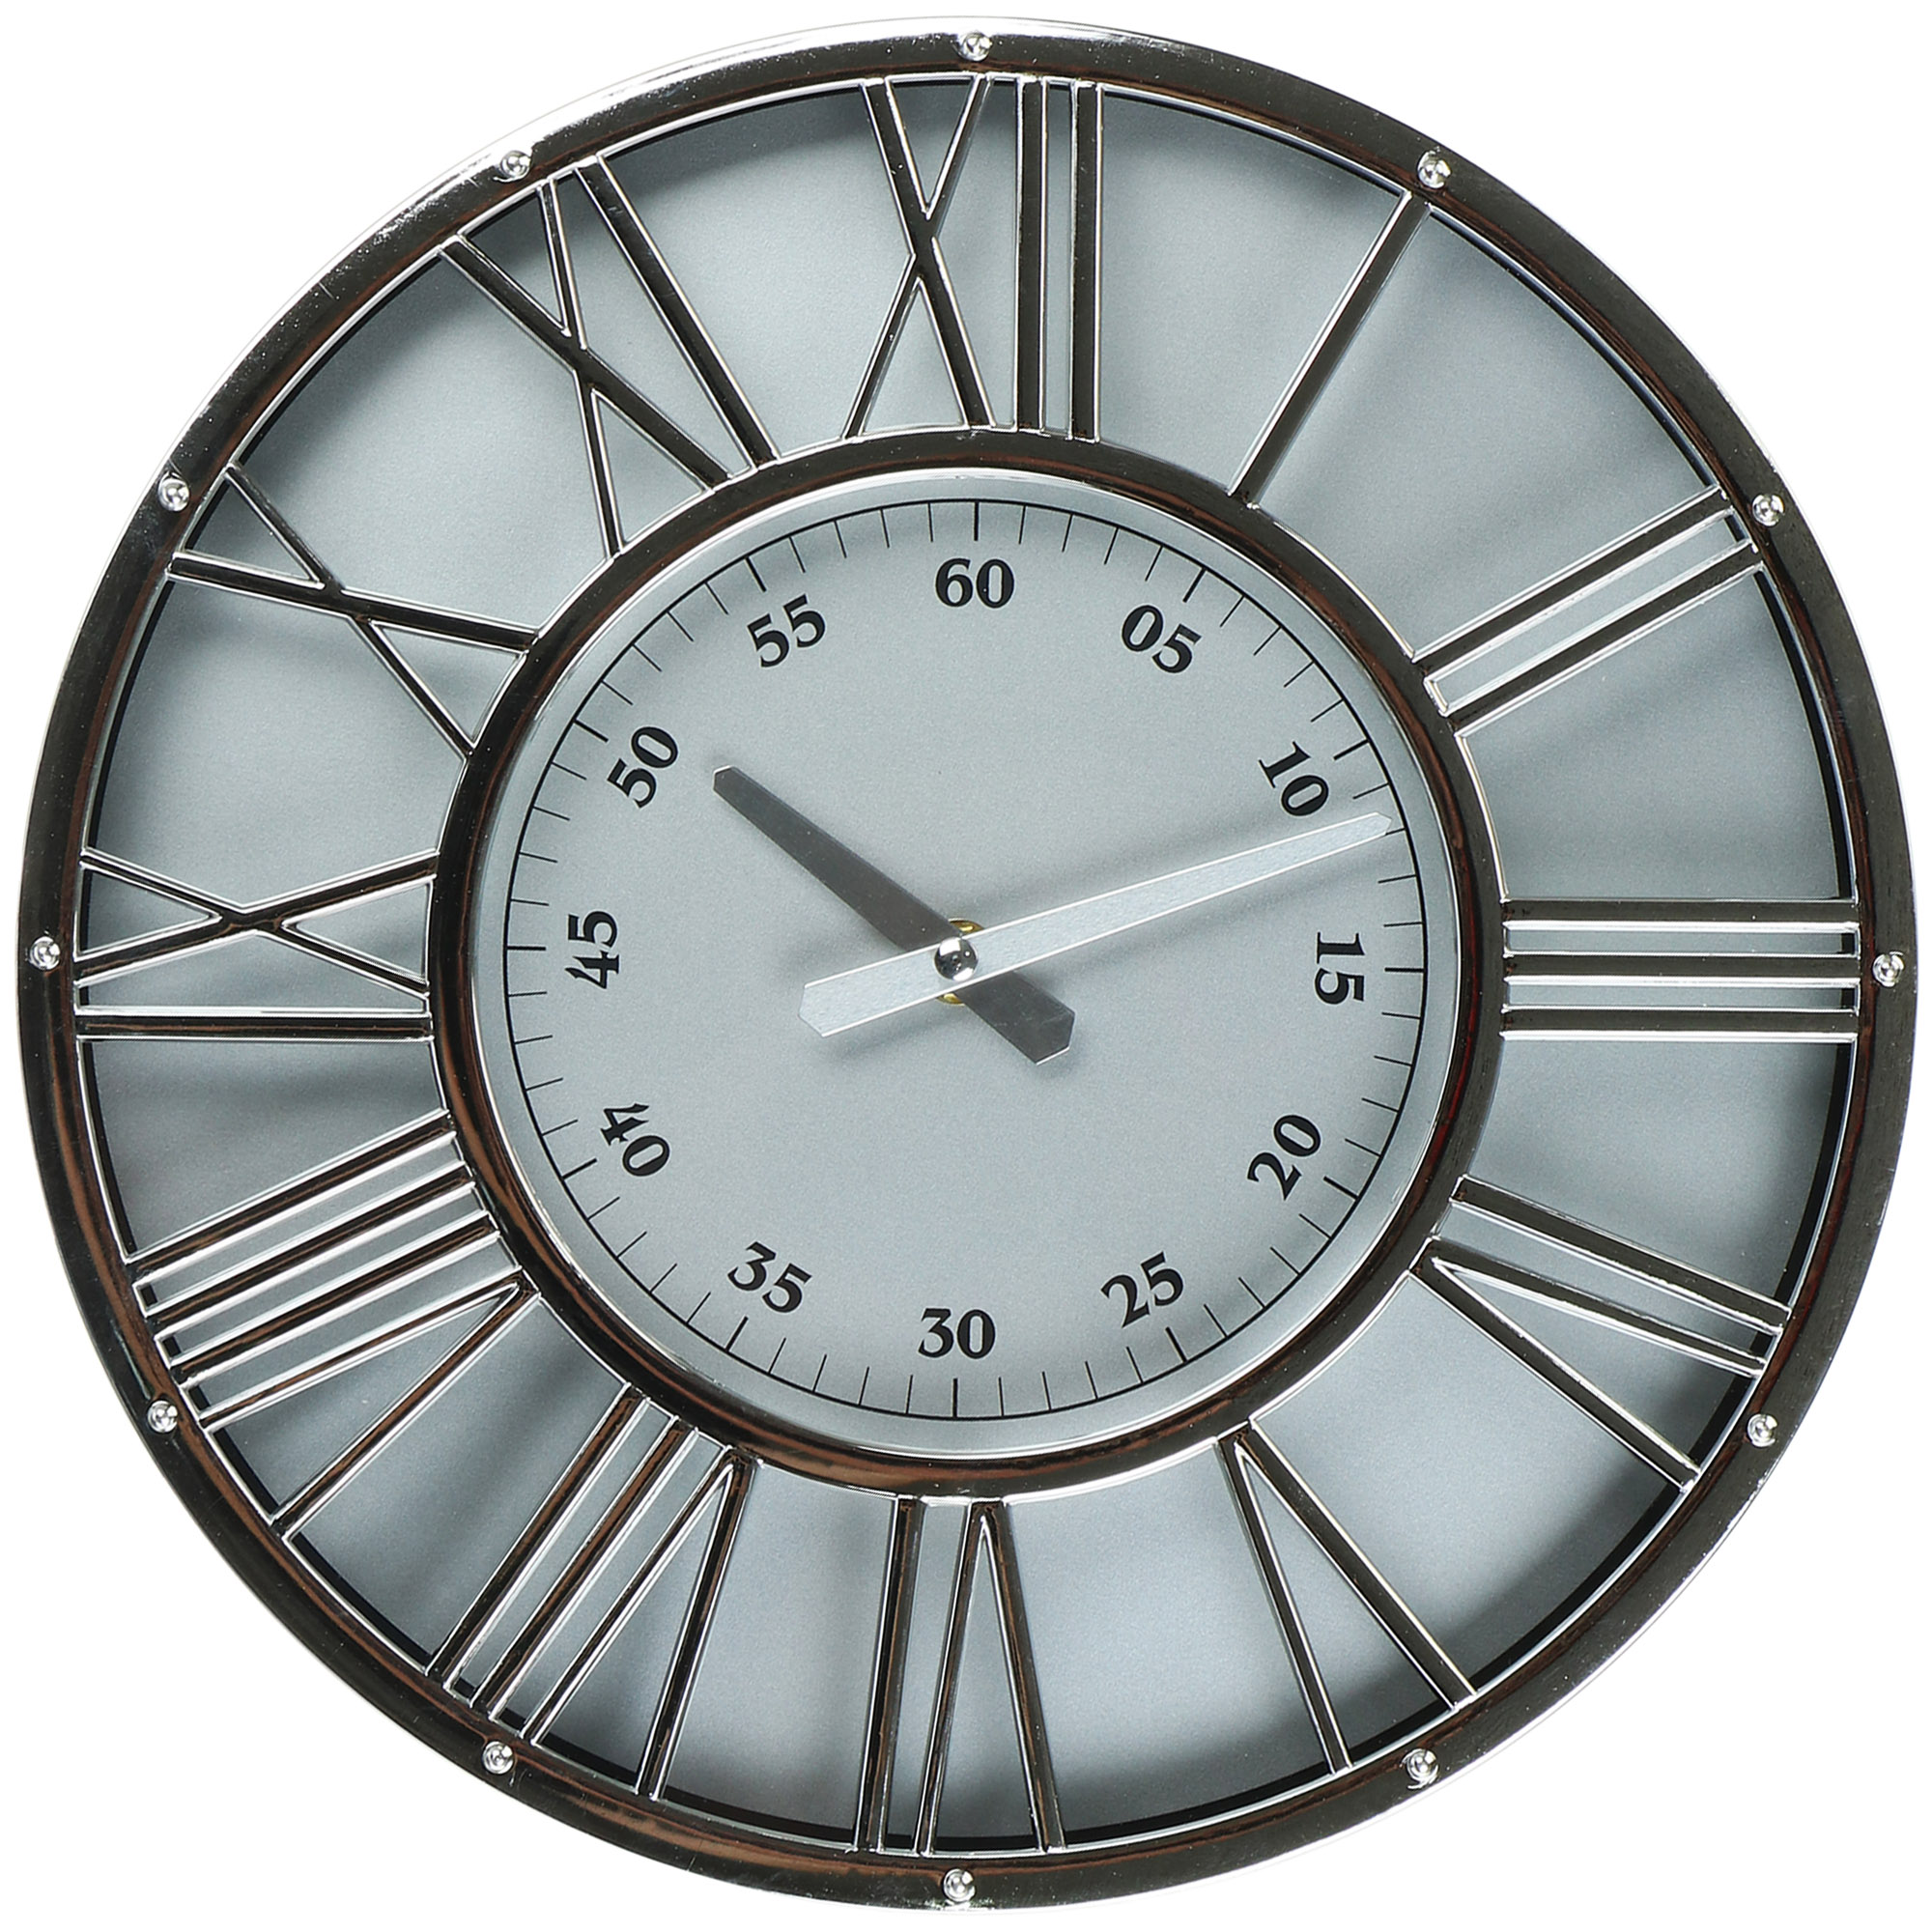 Часы настенные Kanglijia Clock серебряные 30,4х4,1х30,4 см часы электронные настенные настольные будильник календарь термометр 1cr2032 39 x 13 см